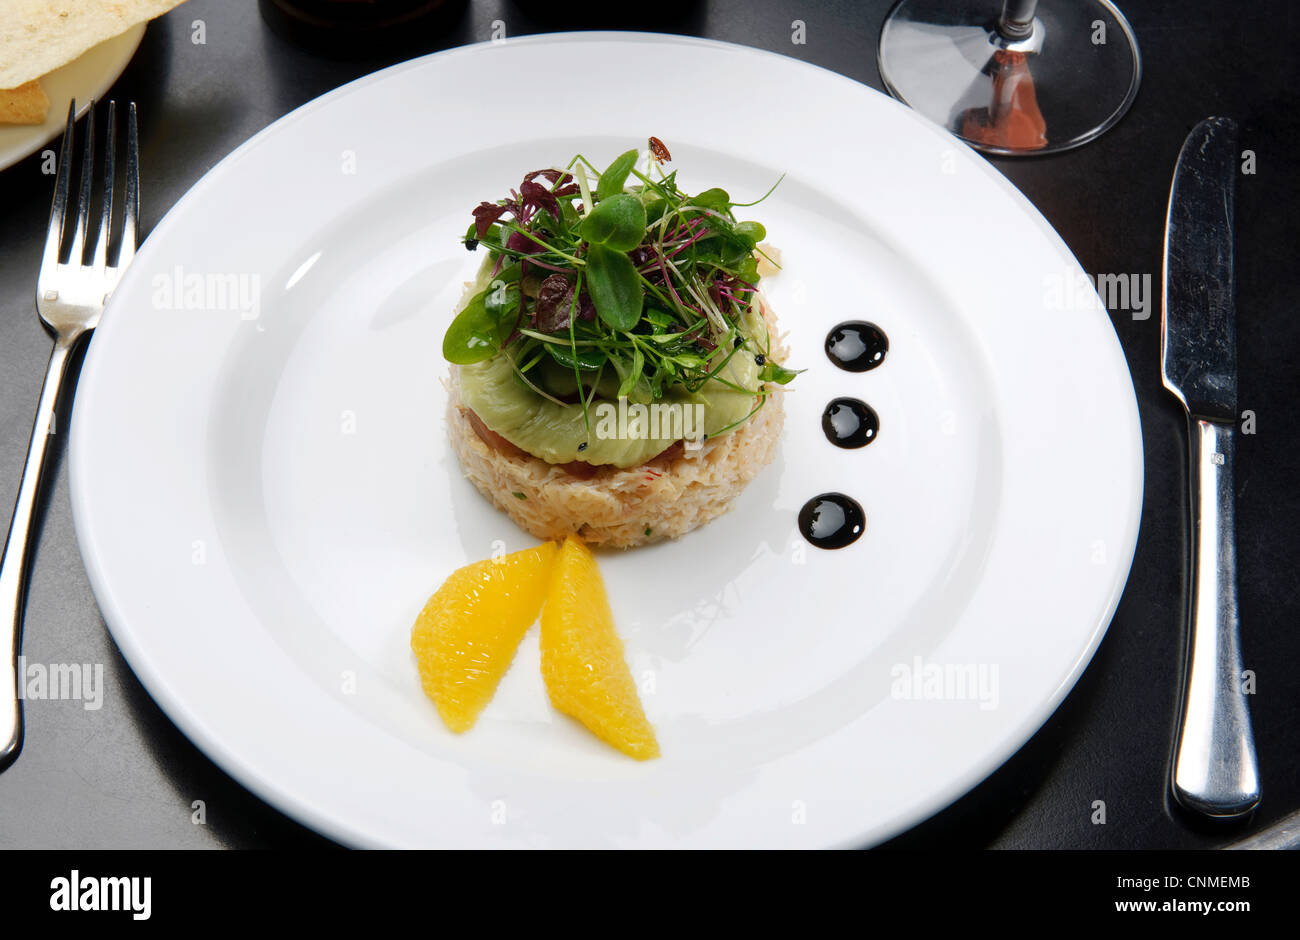 gourmet cuisine expensive restaurant food Stock Photo